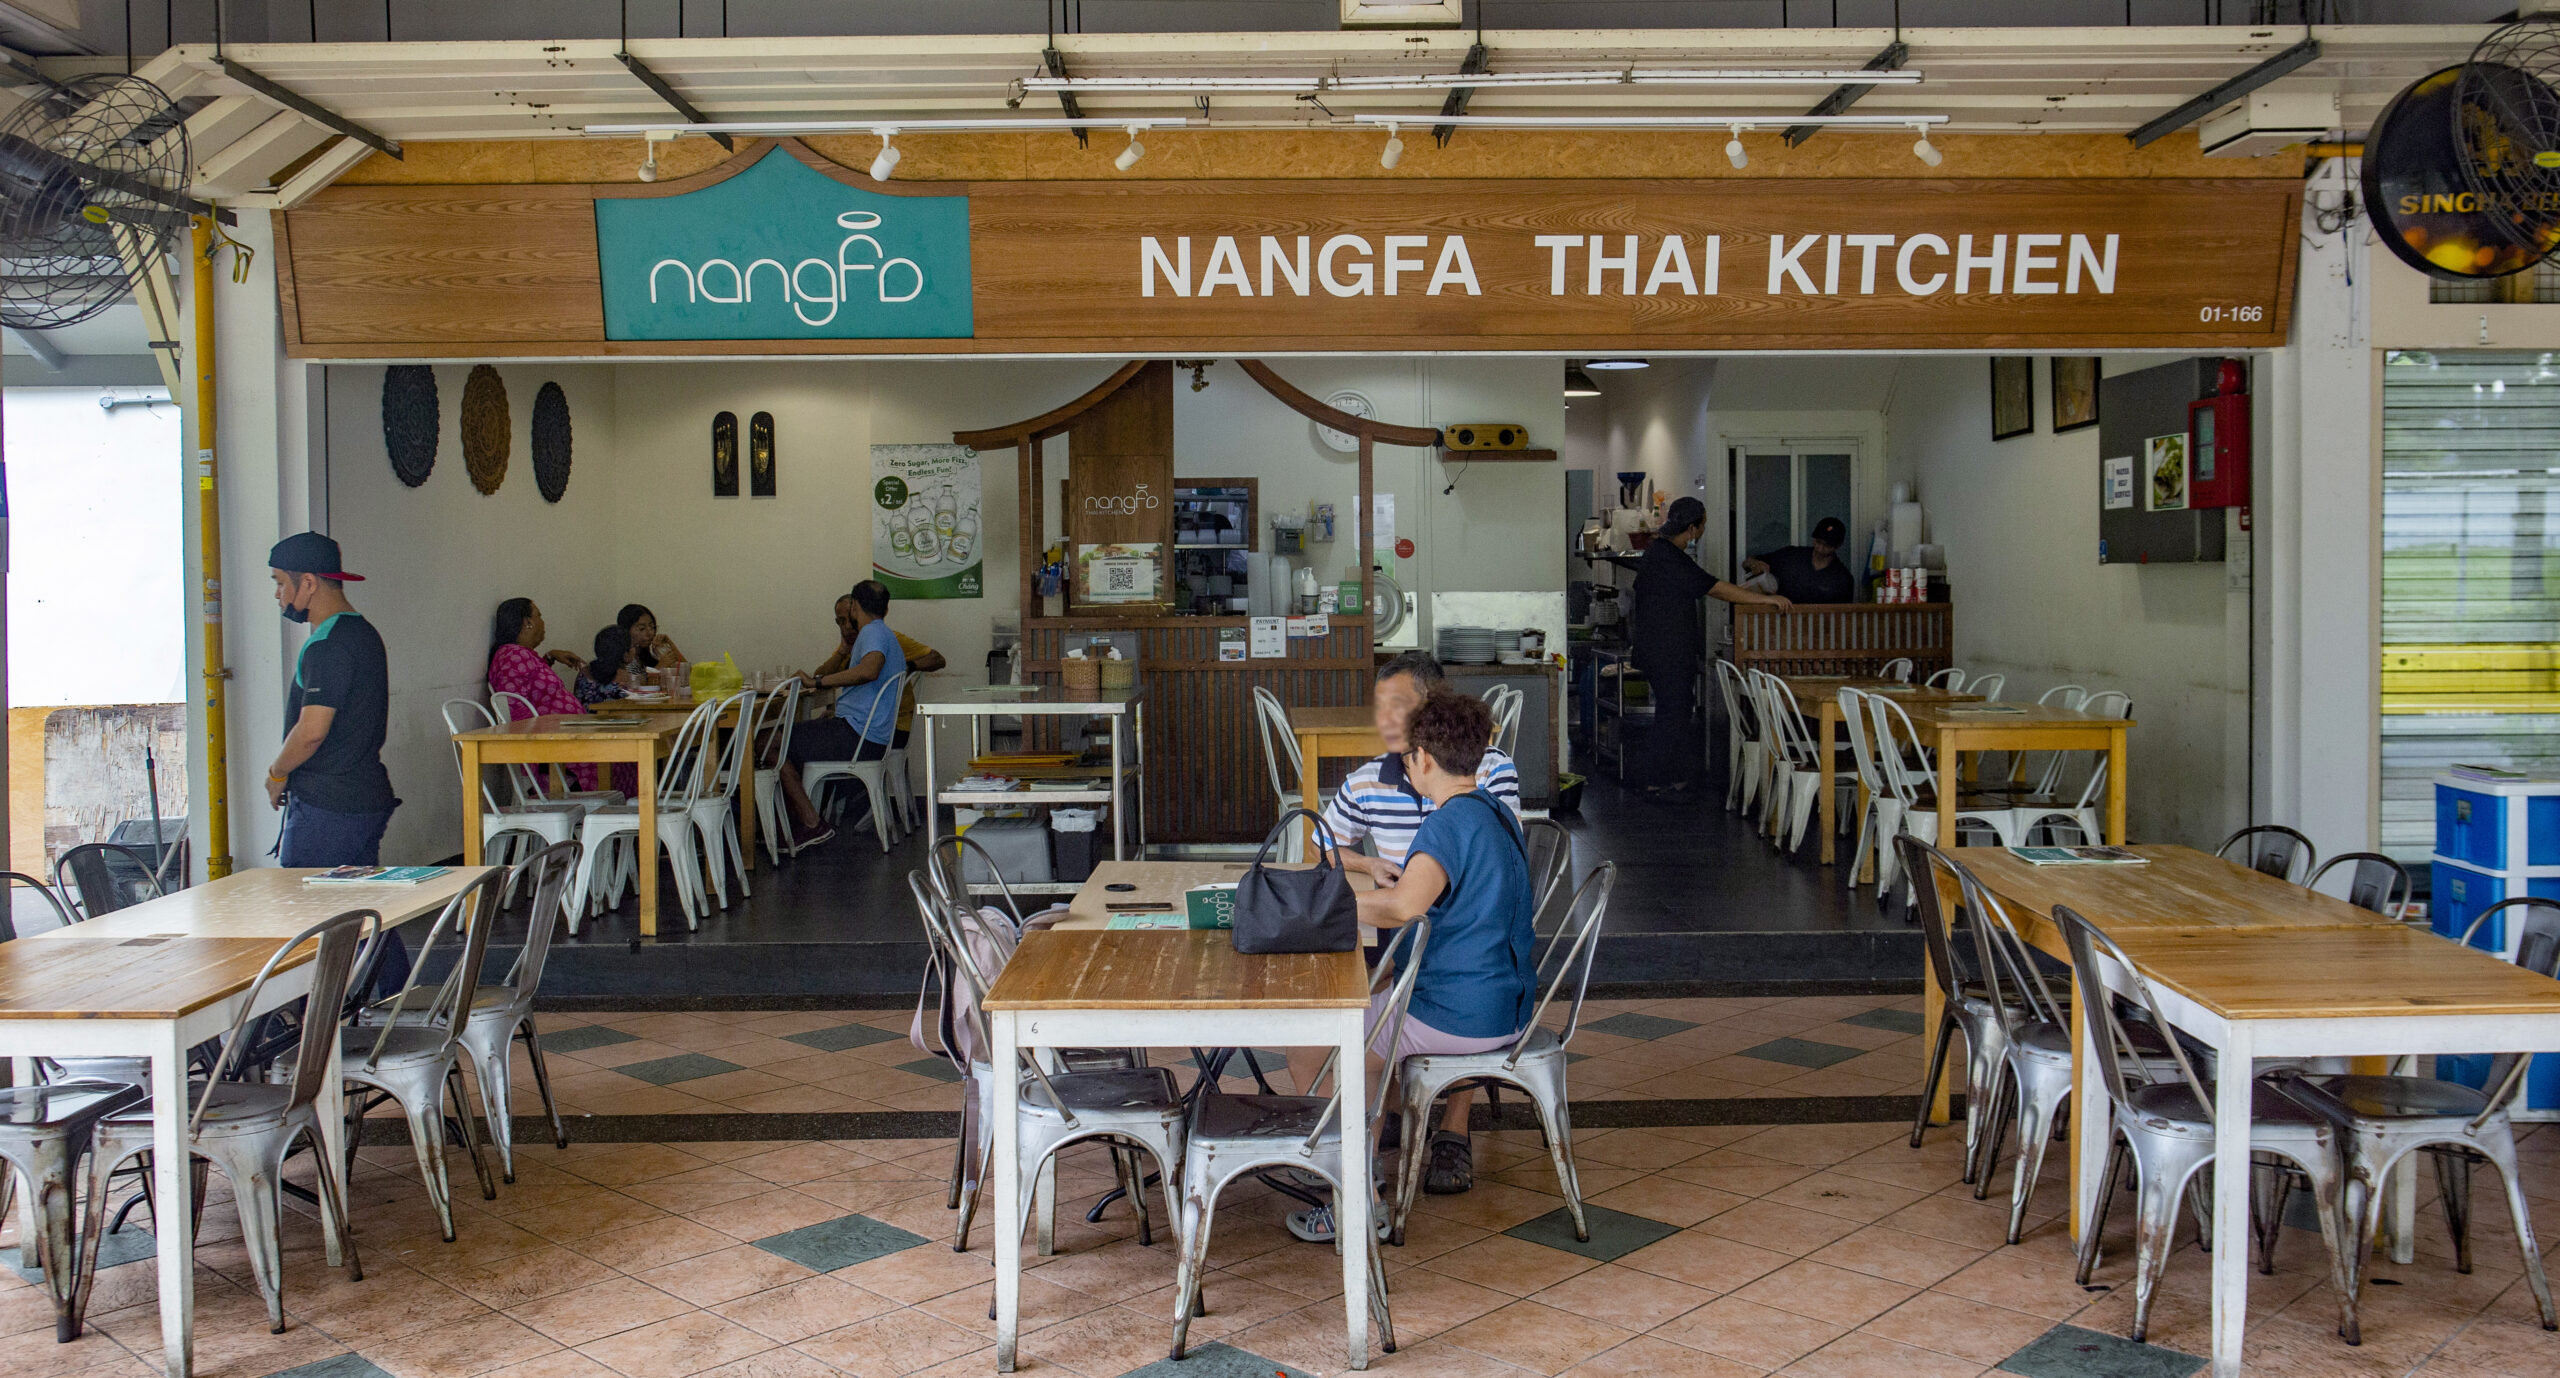 Nangfa Thai Kitchen - Ambience